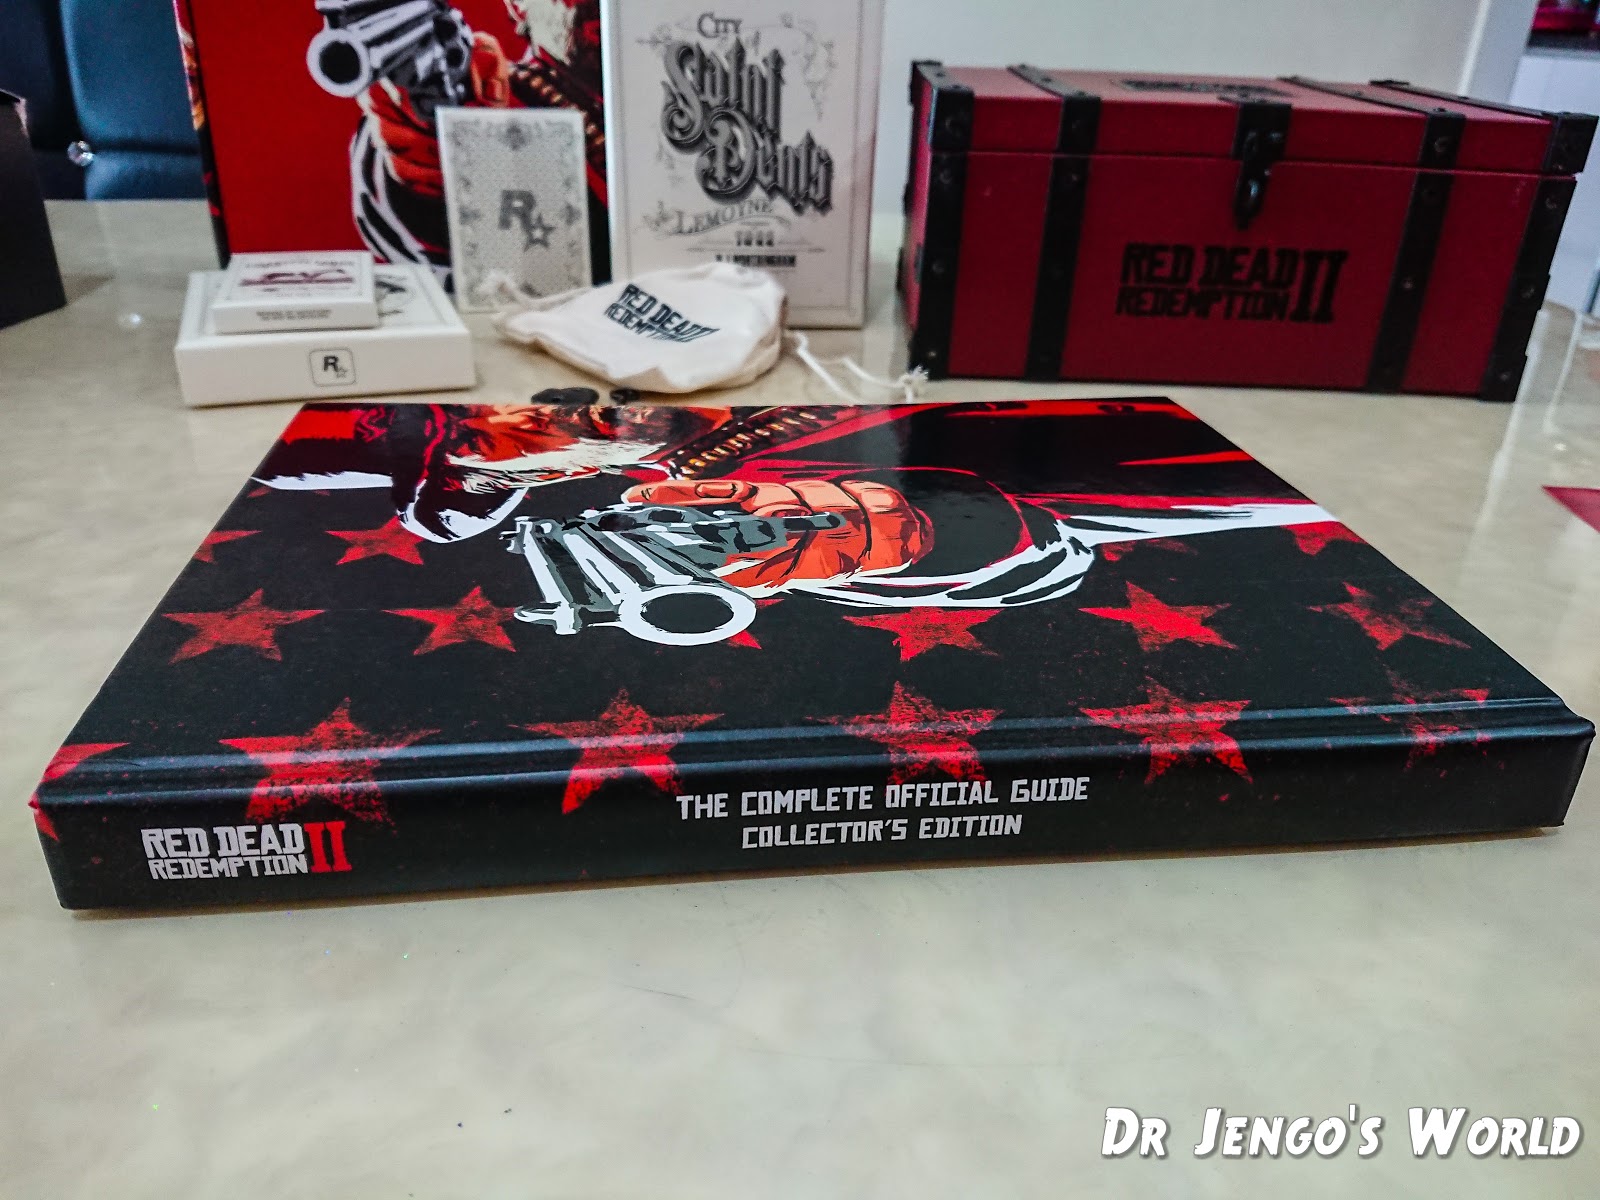 Jengo's Dead Redemption 2 Collectors' Guidebook Collection